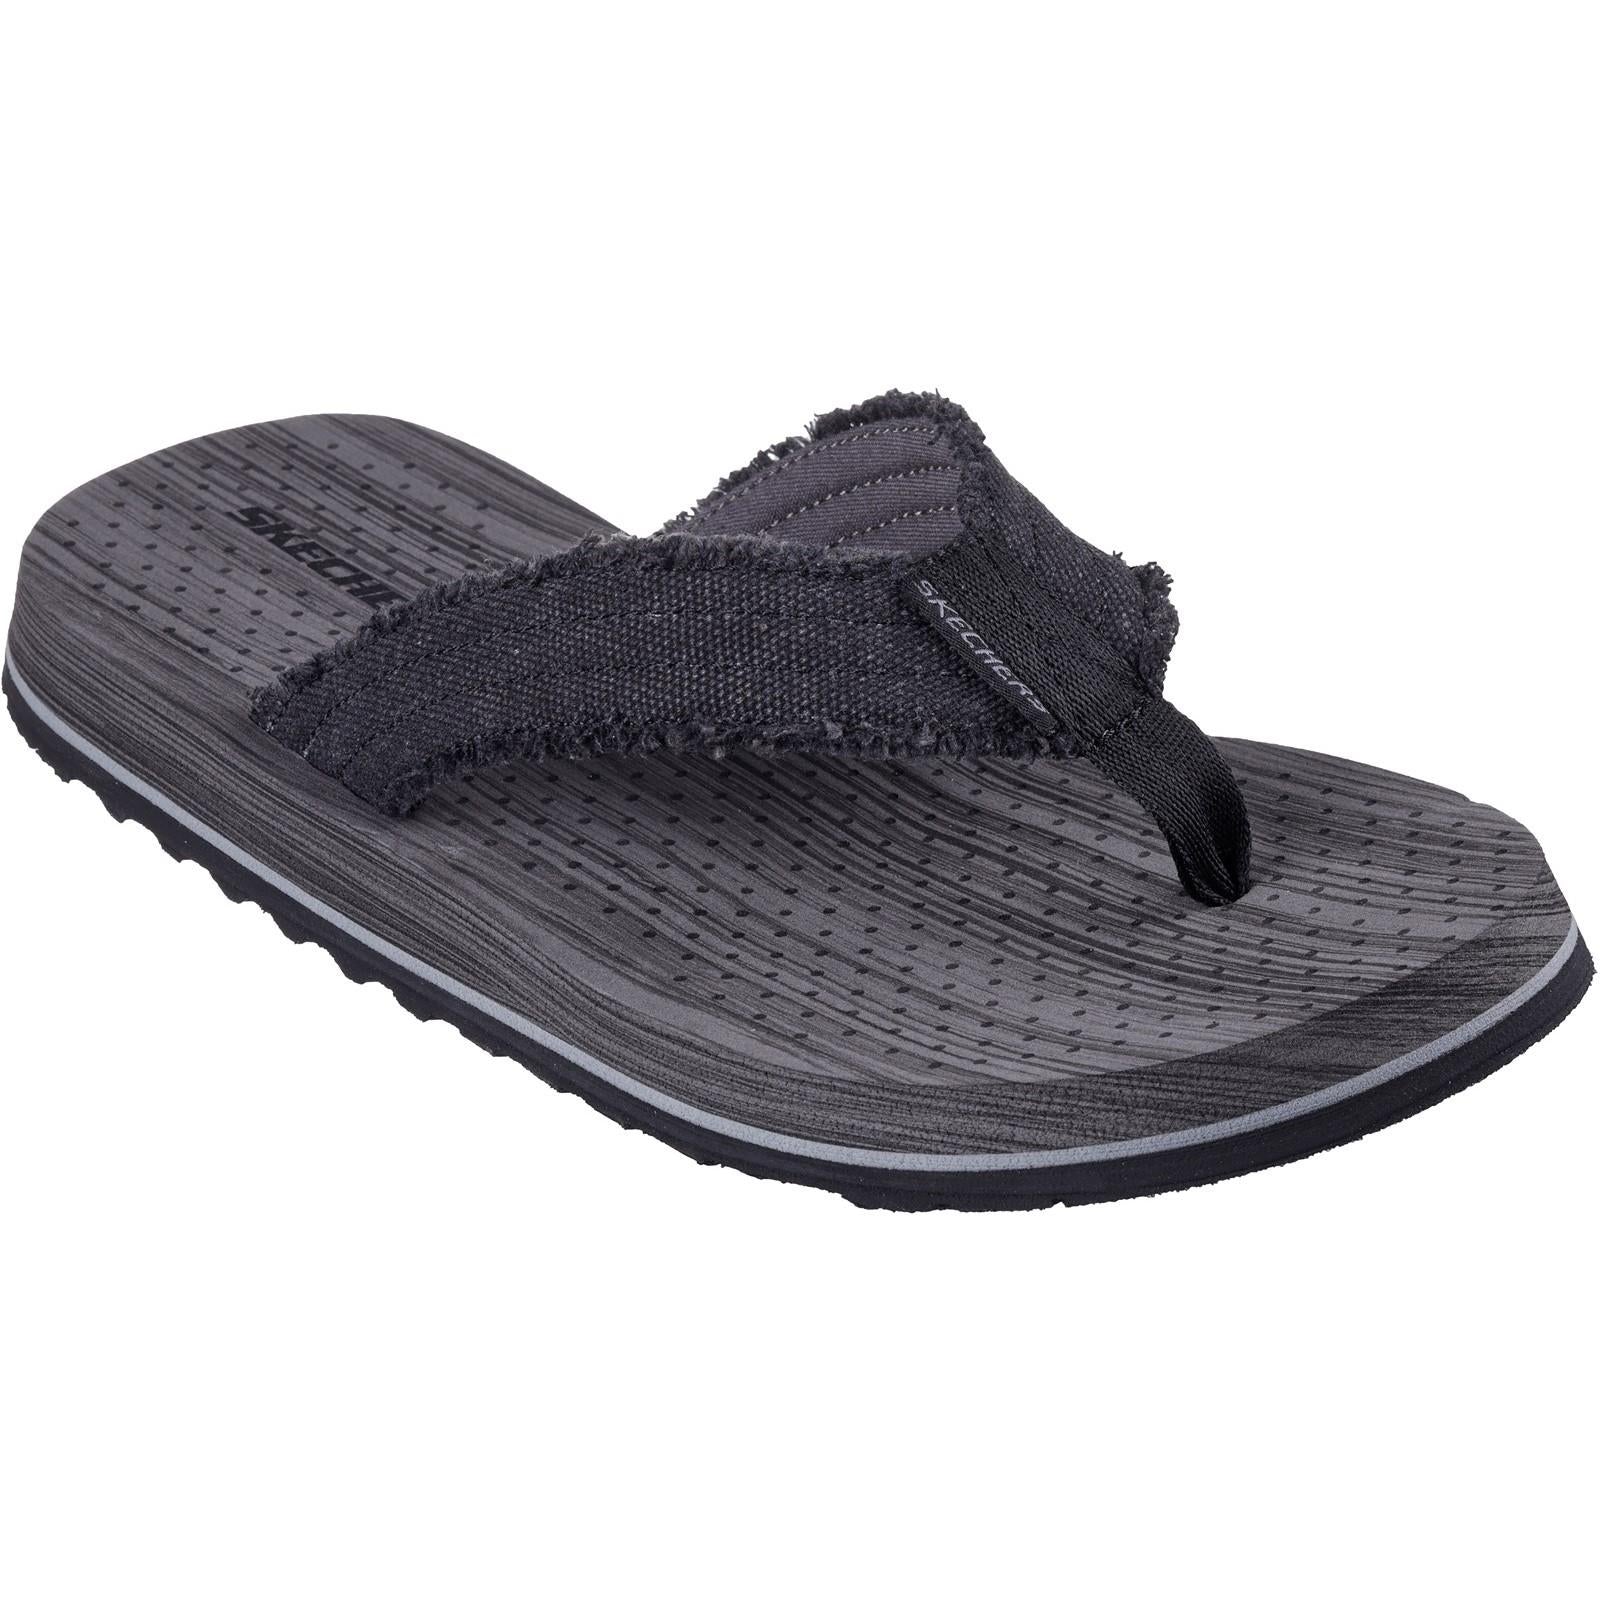 Skechers Tantric Fritz black summer flip-flop sandals #205098